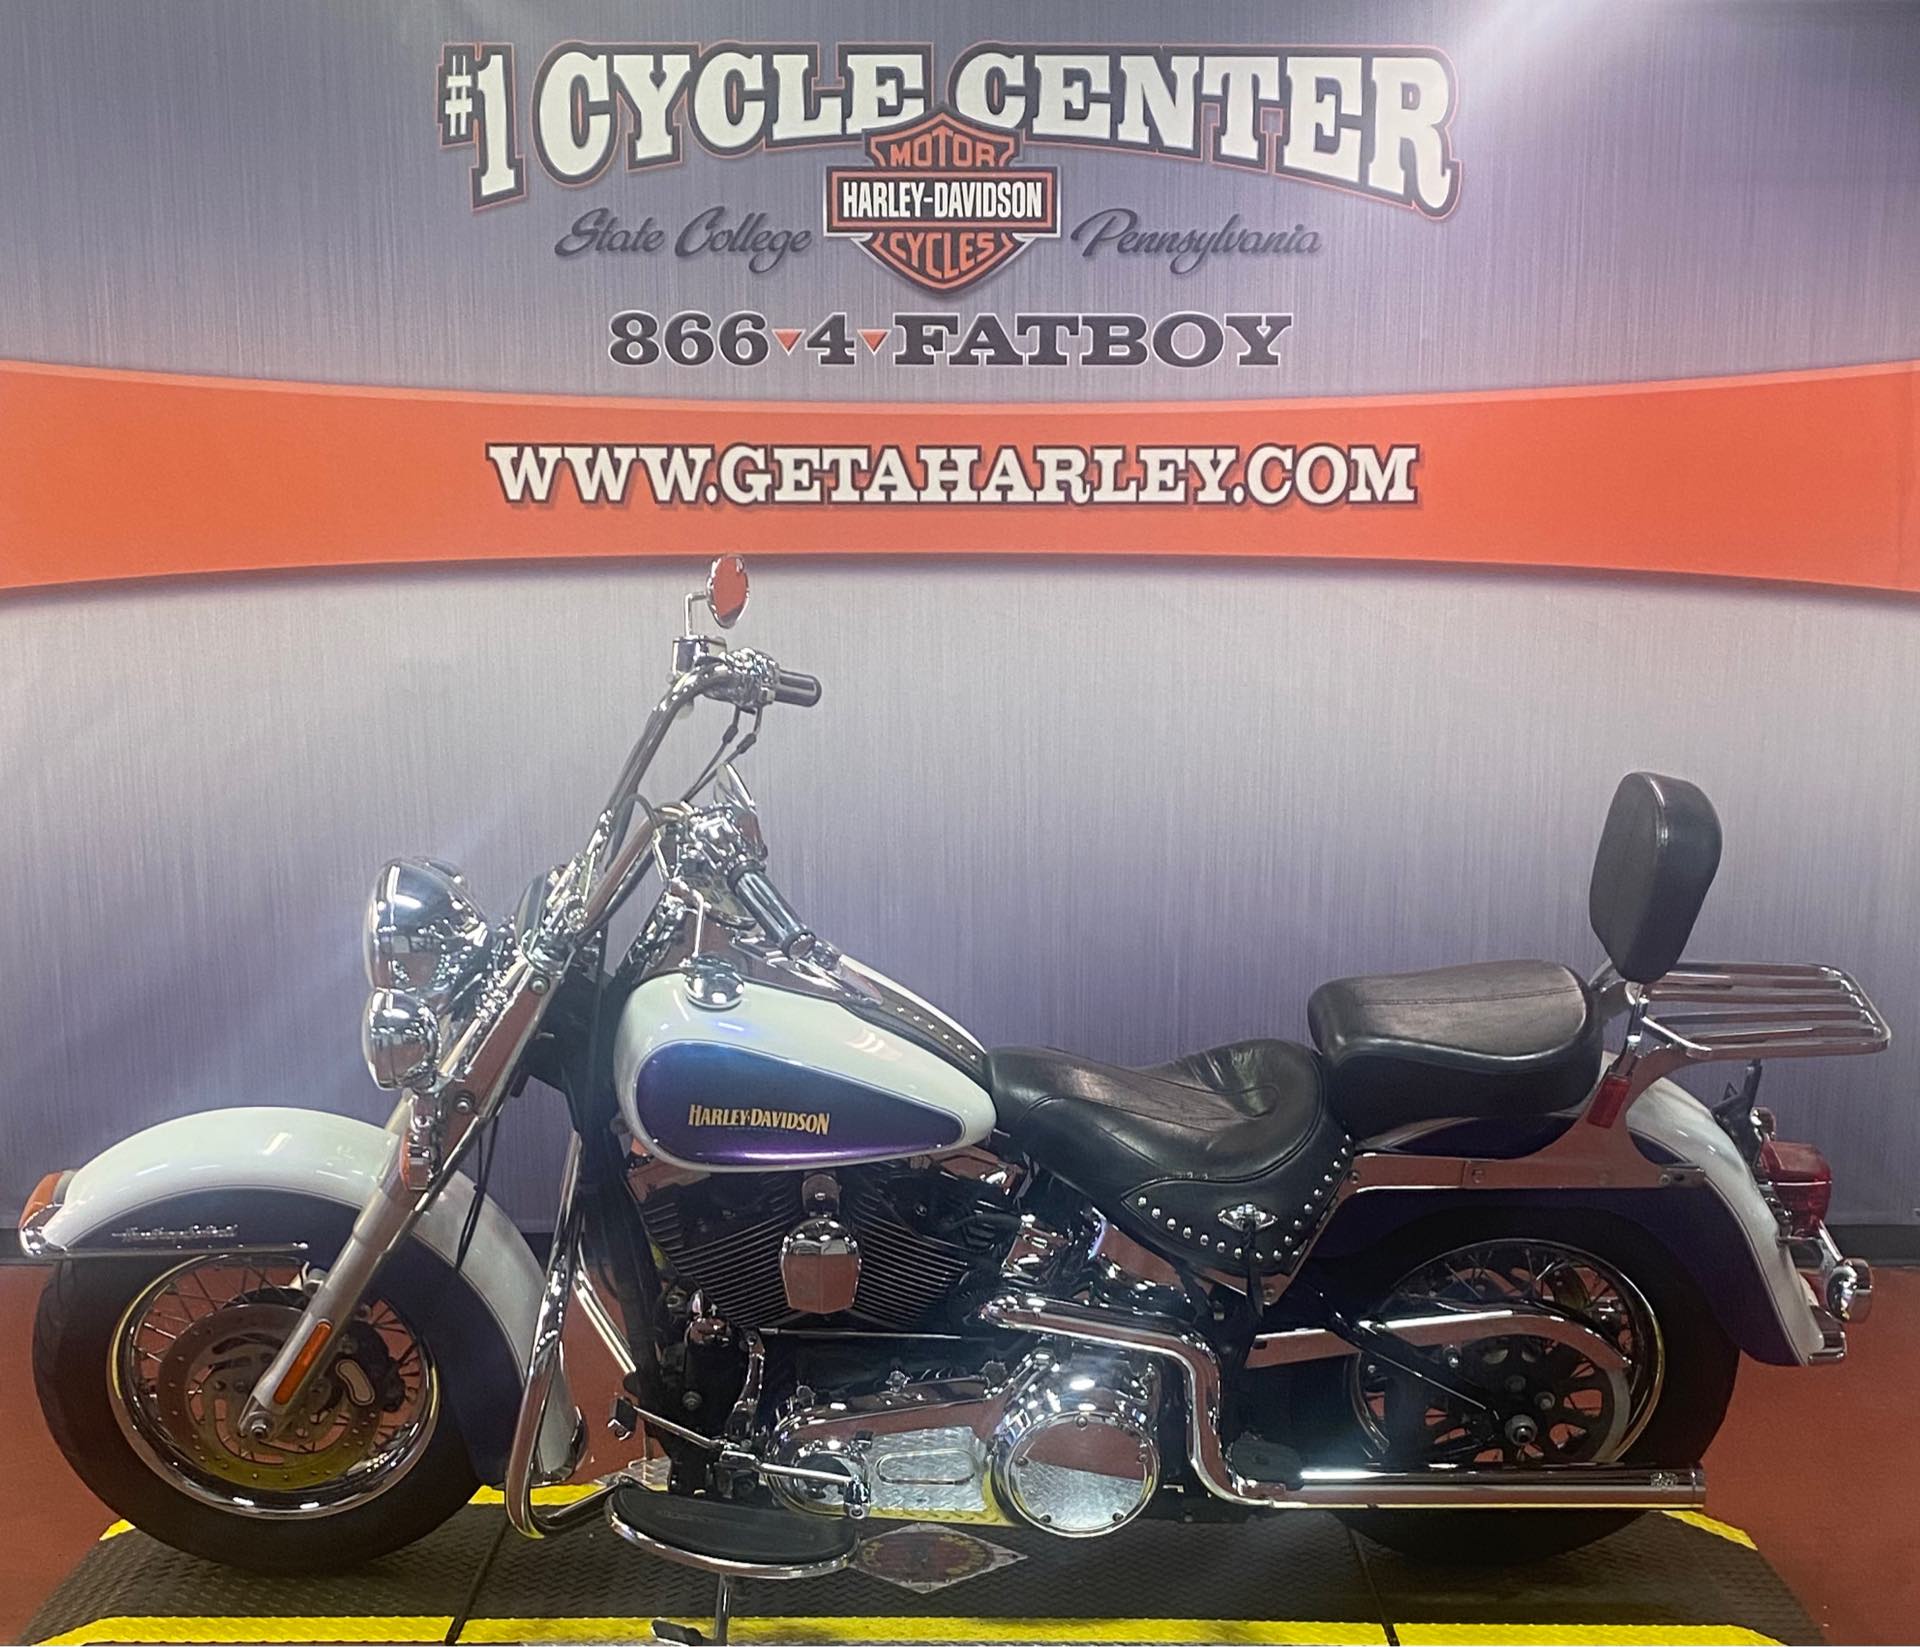 2010 Harley-Davidson Softail Heritage Softail Classic at #1 Cycle Center Harley-Davidson